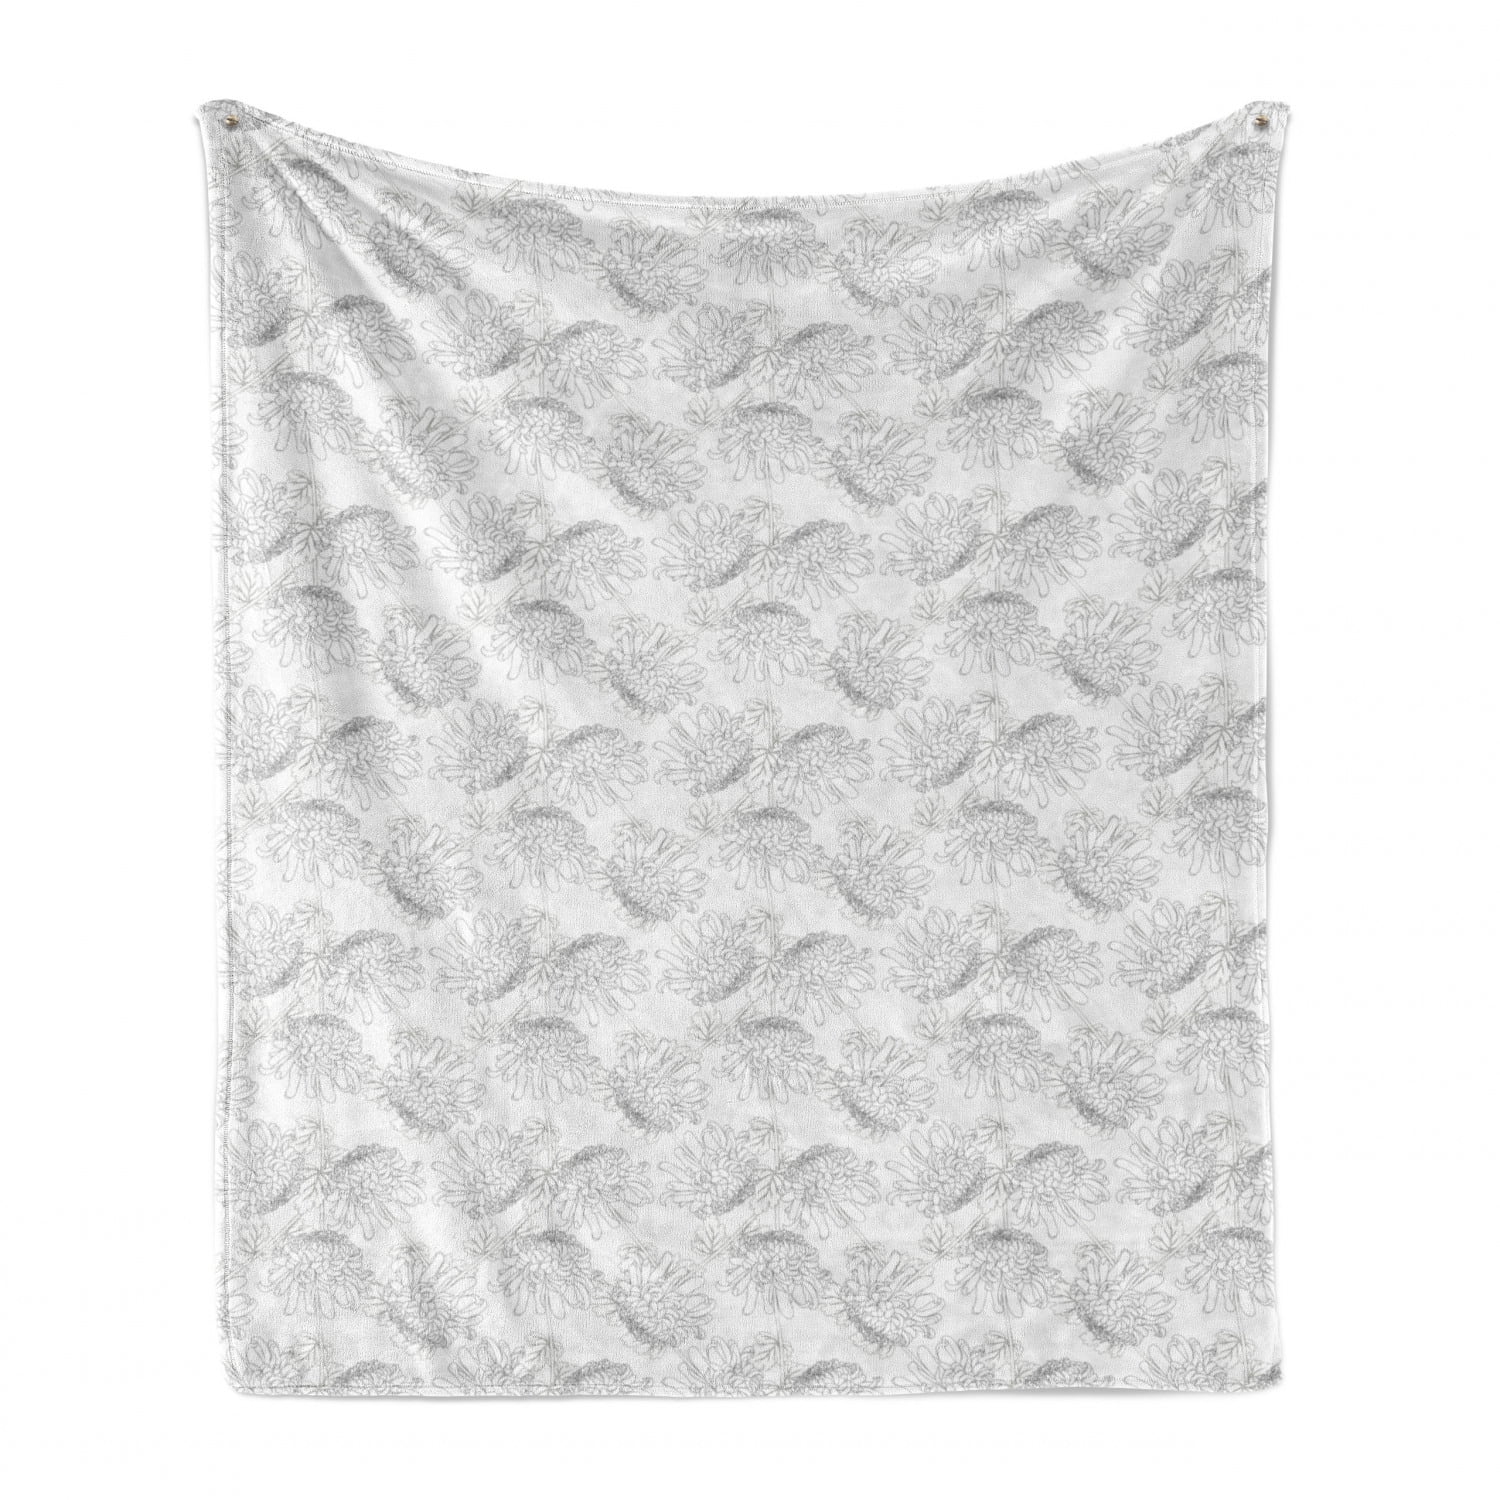 Details about   Fleece Blanket Photo Bedspread Blanket with Motif Wellness Chrysanthemum Harmony show original title 